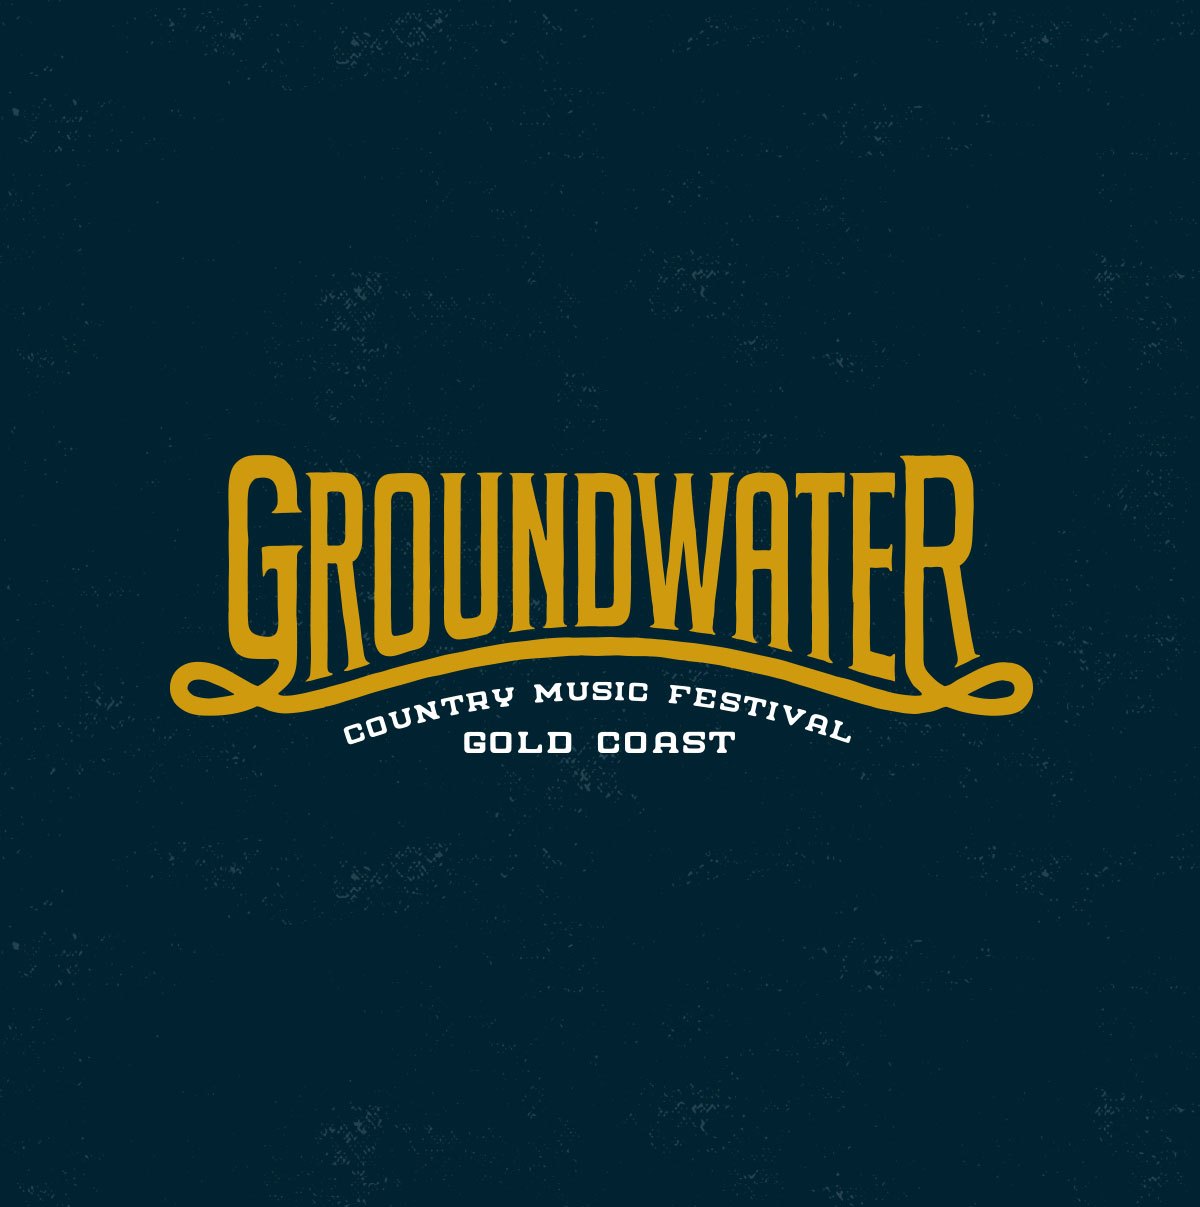 Groundwater-CMF-Branding-MOBILE